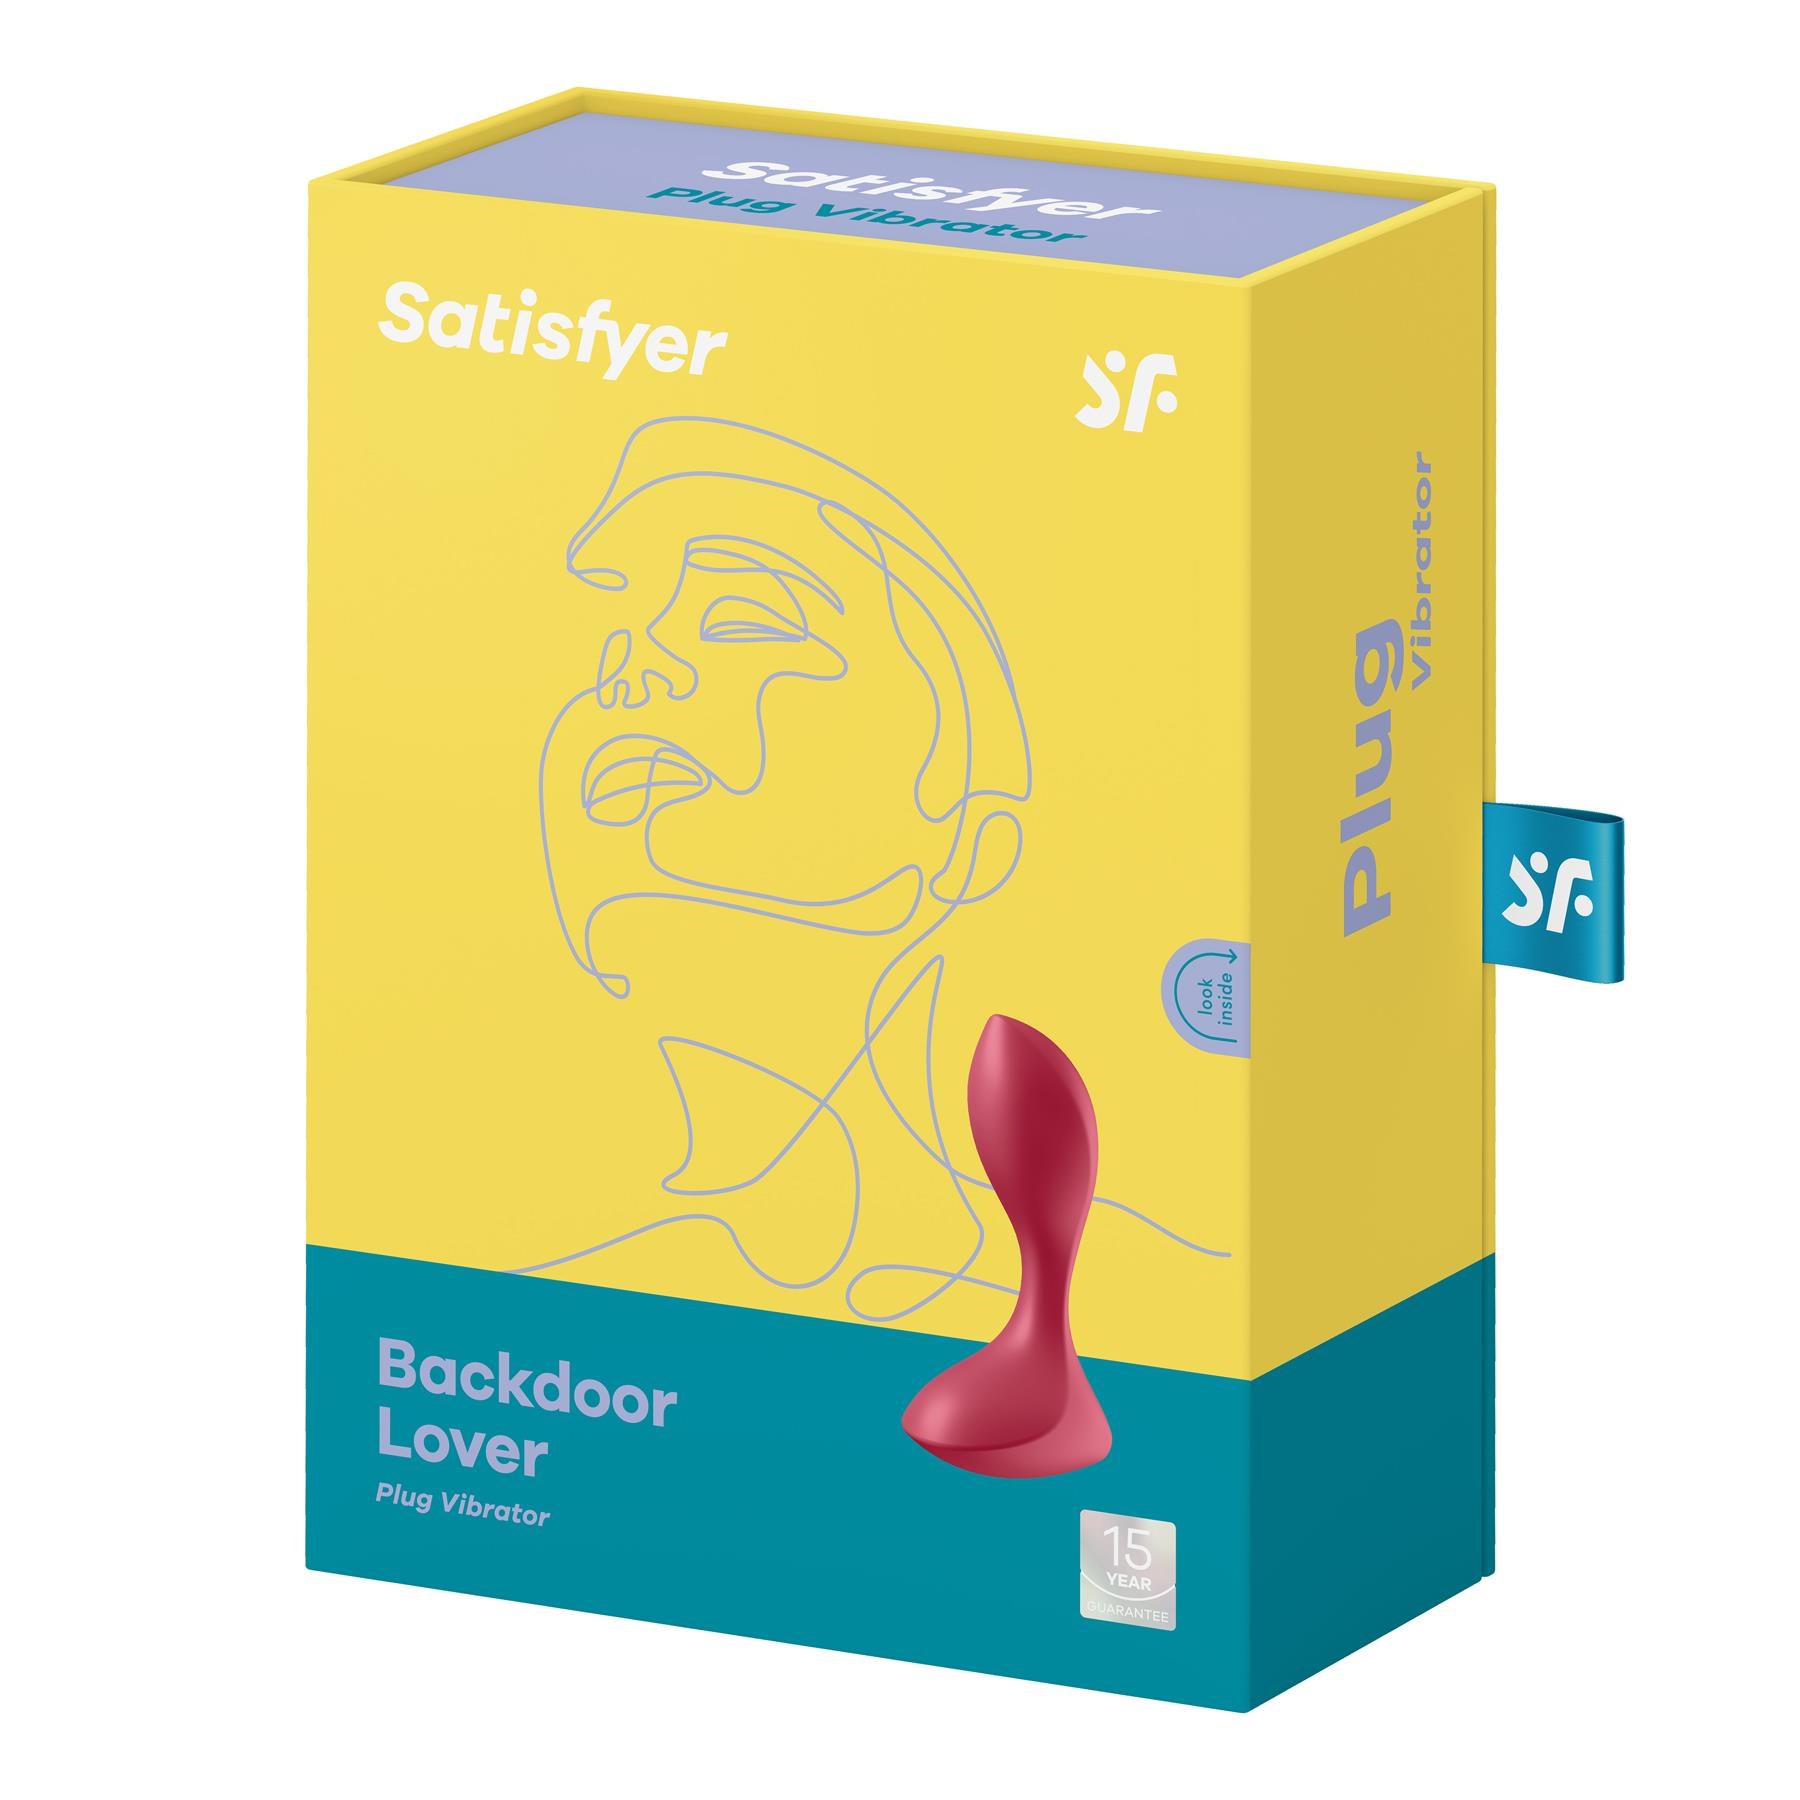 Satisfyer Backdoor Lover Vibrating Anal Plug - Packaging Shot